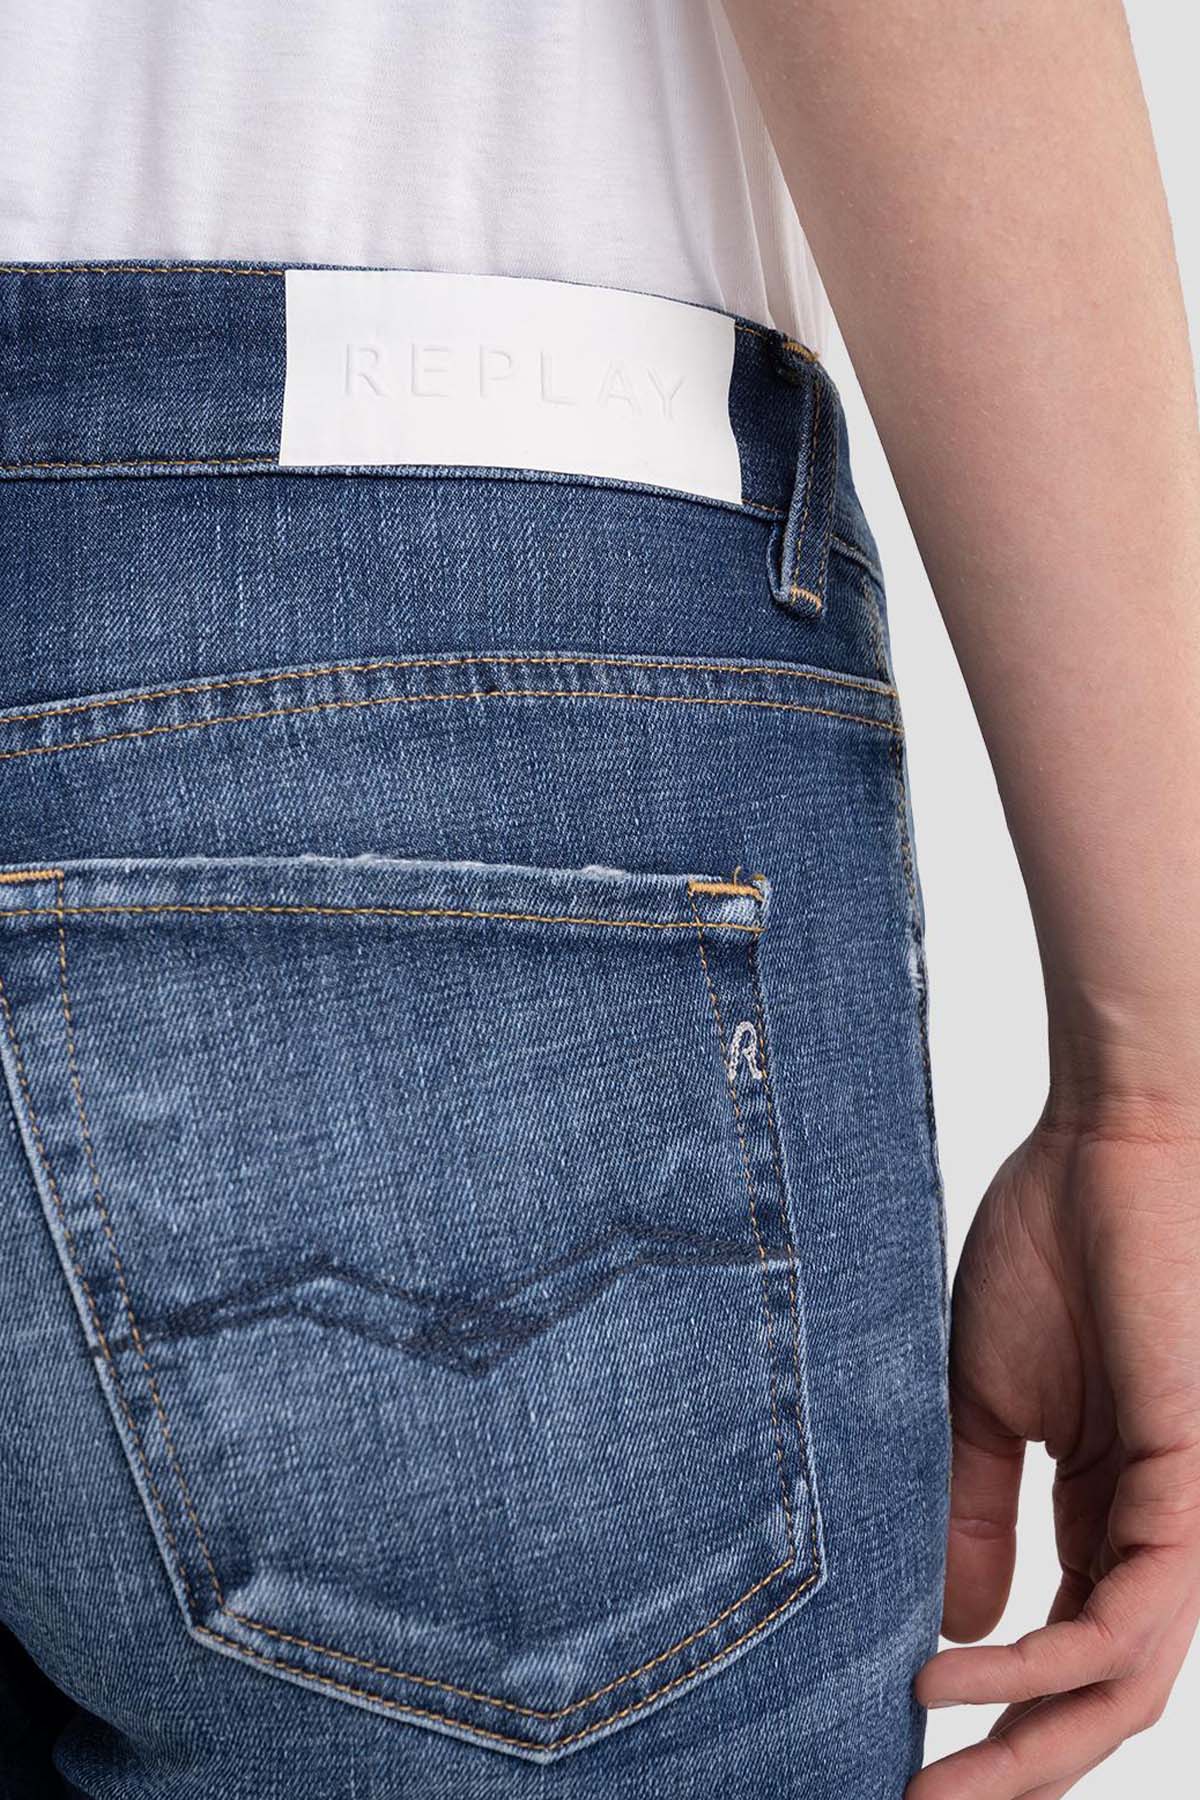 Replay Marty Slim Boyfriend Fit Jeans-Libas Trendy Fashion Store